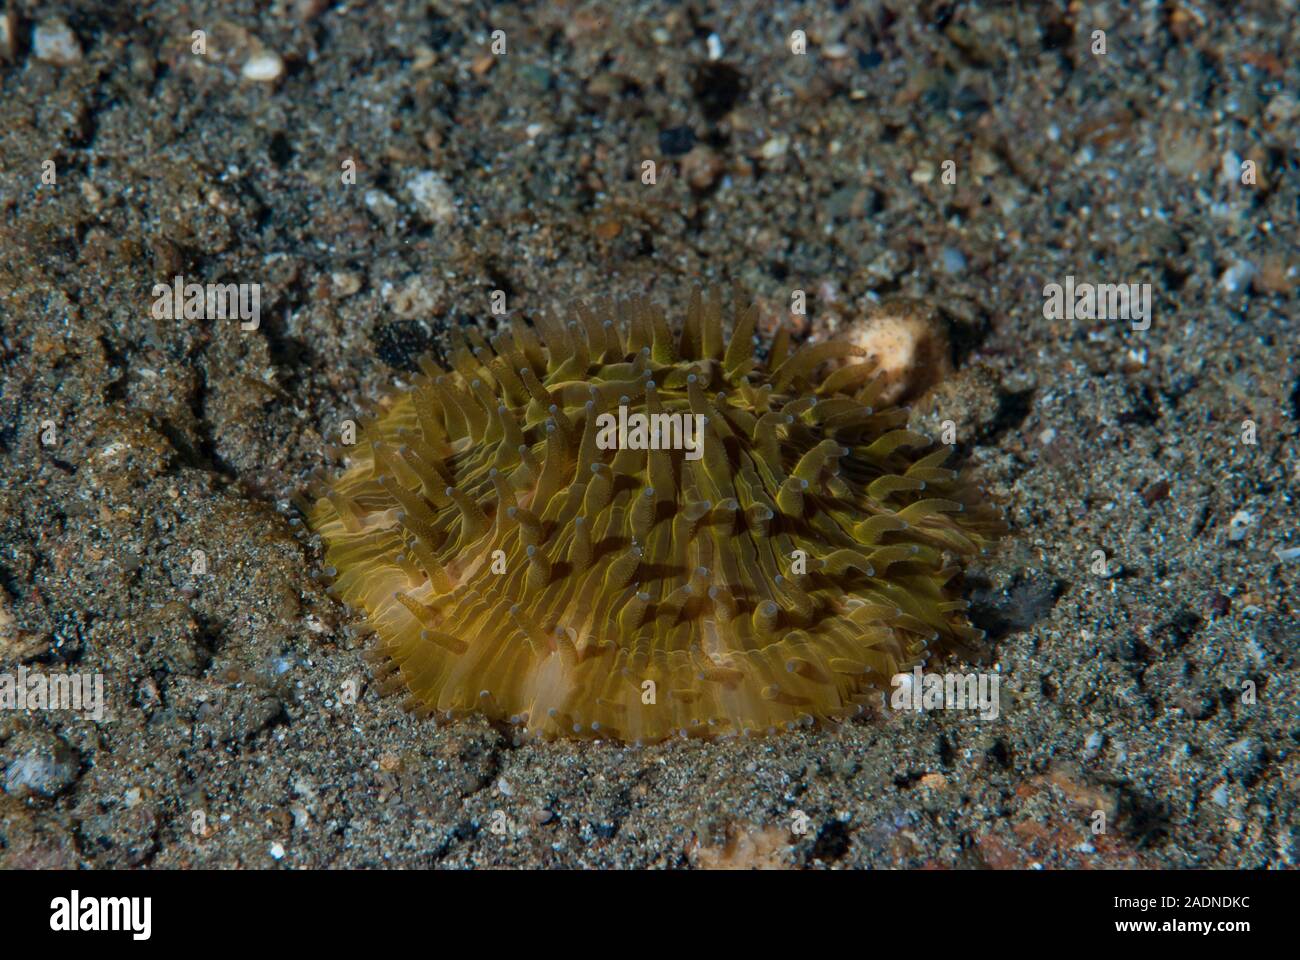 Fotografía de vida marina submarina, criaturas marinas Foto de stock